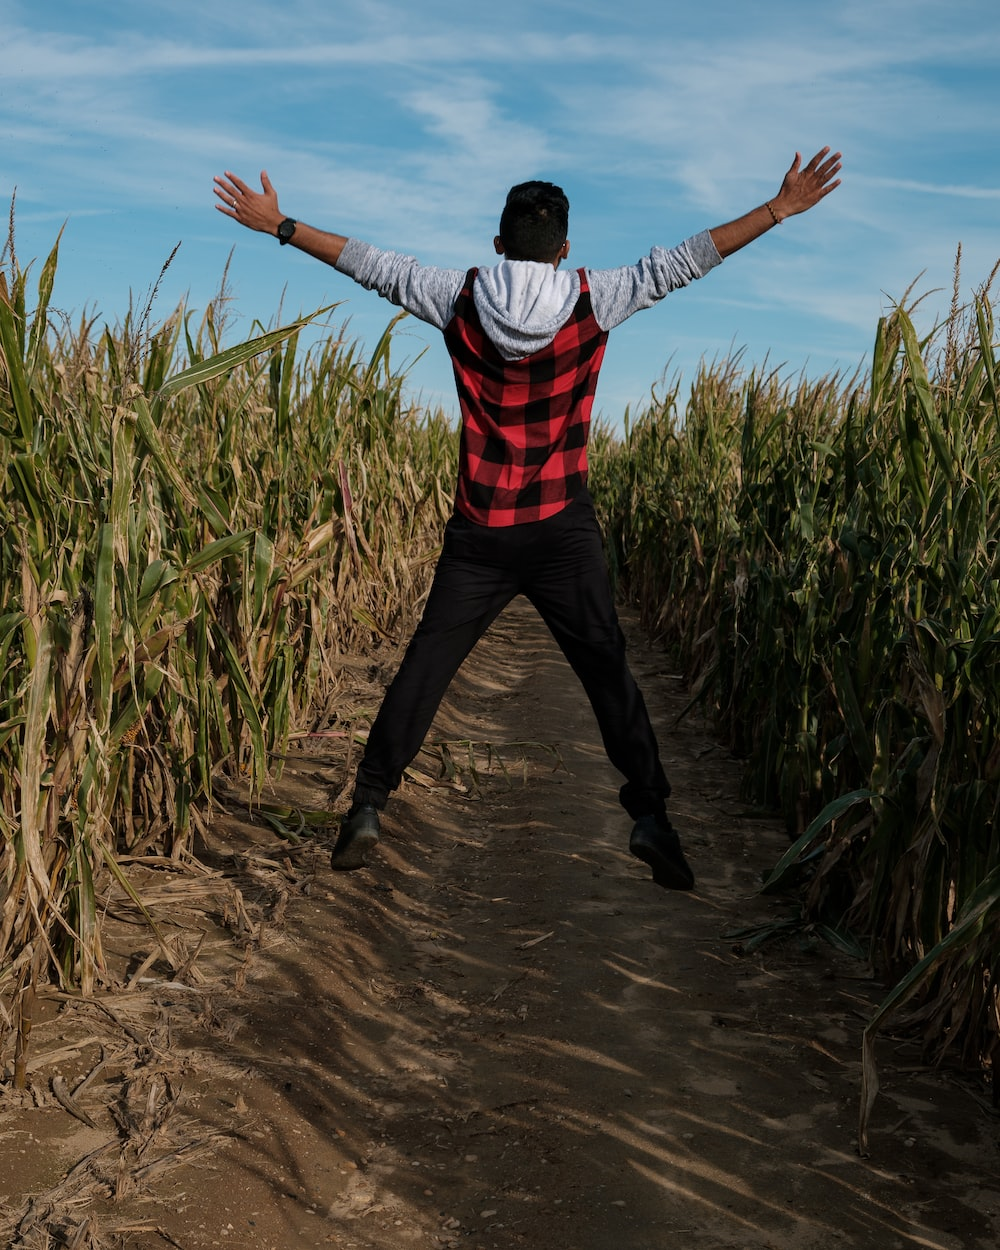 A Boy Jumping in a Corn Maze